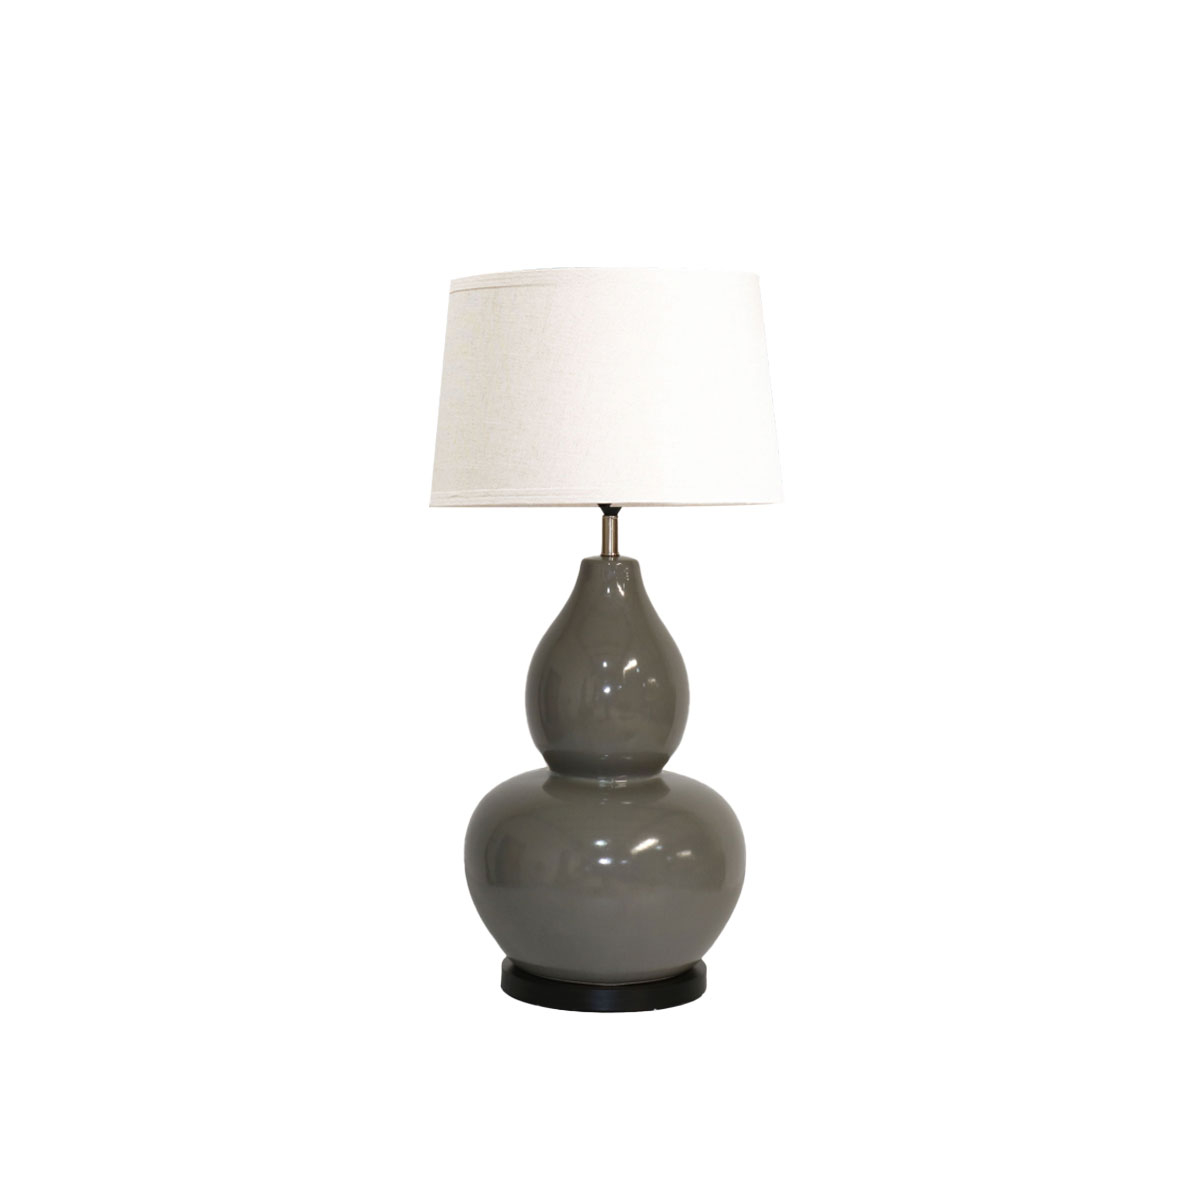 grey ceramic lamp base 